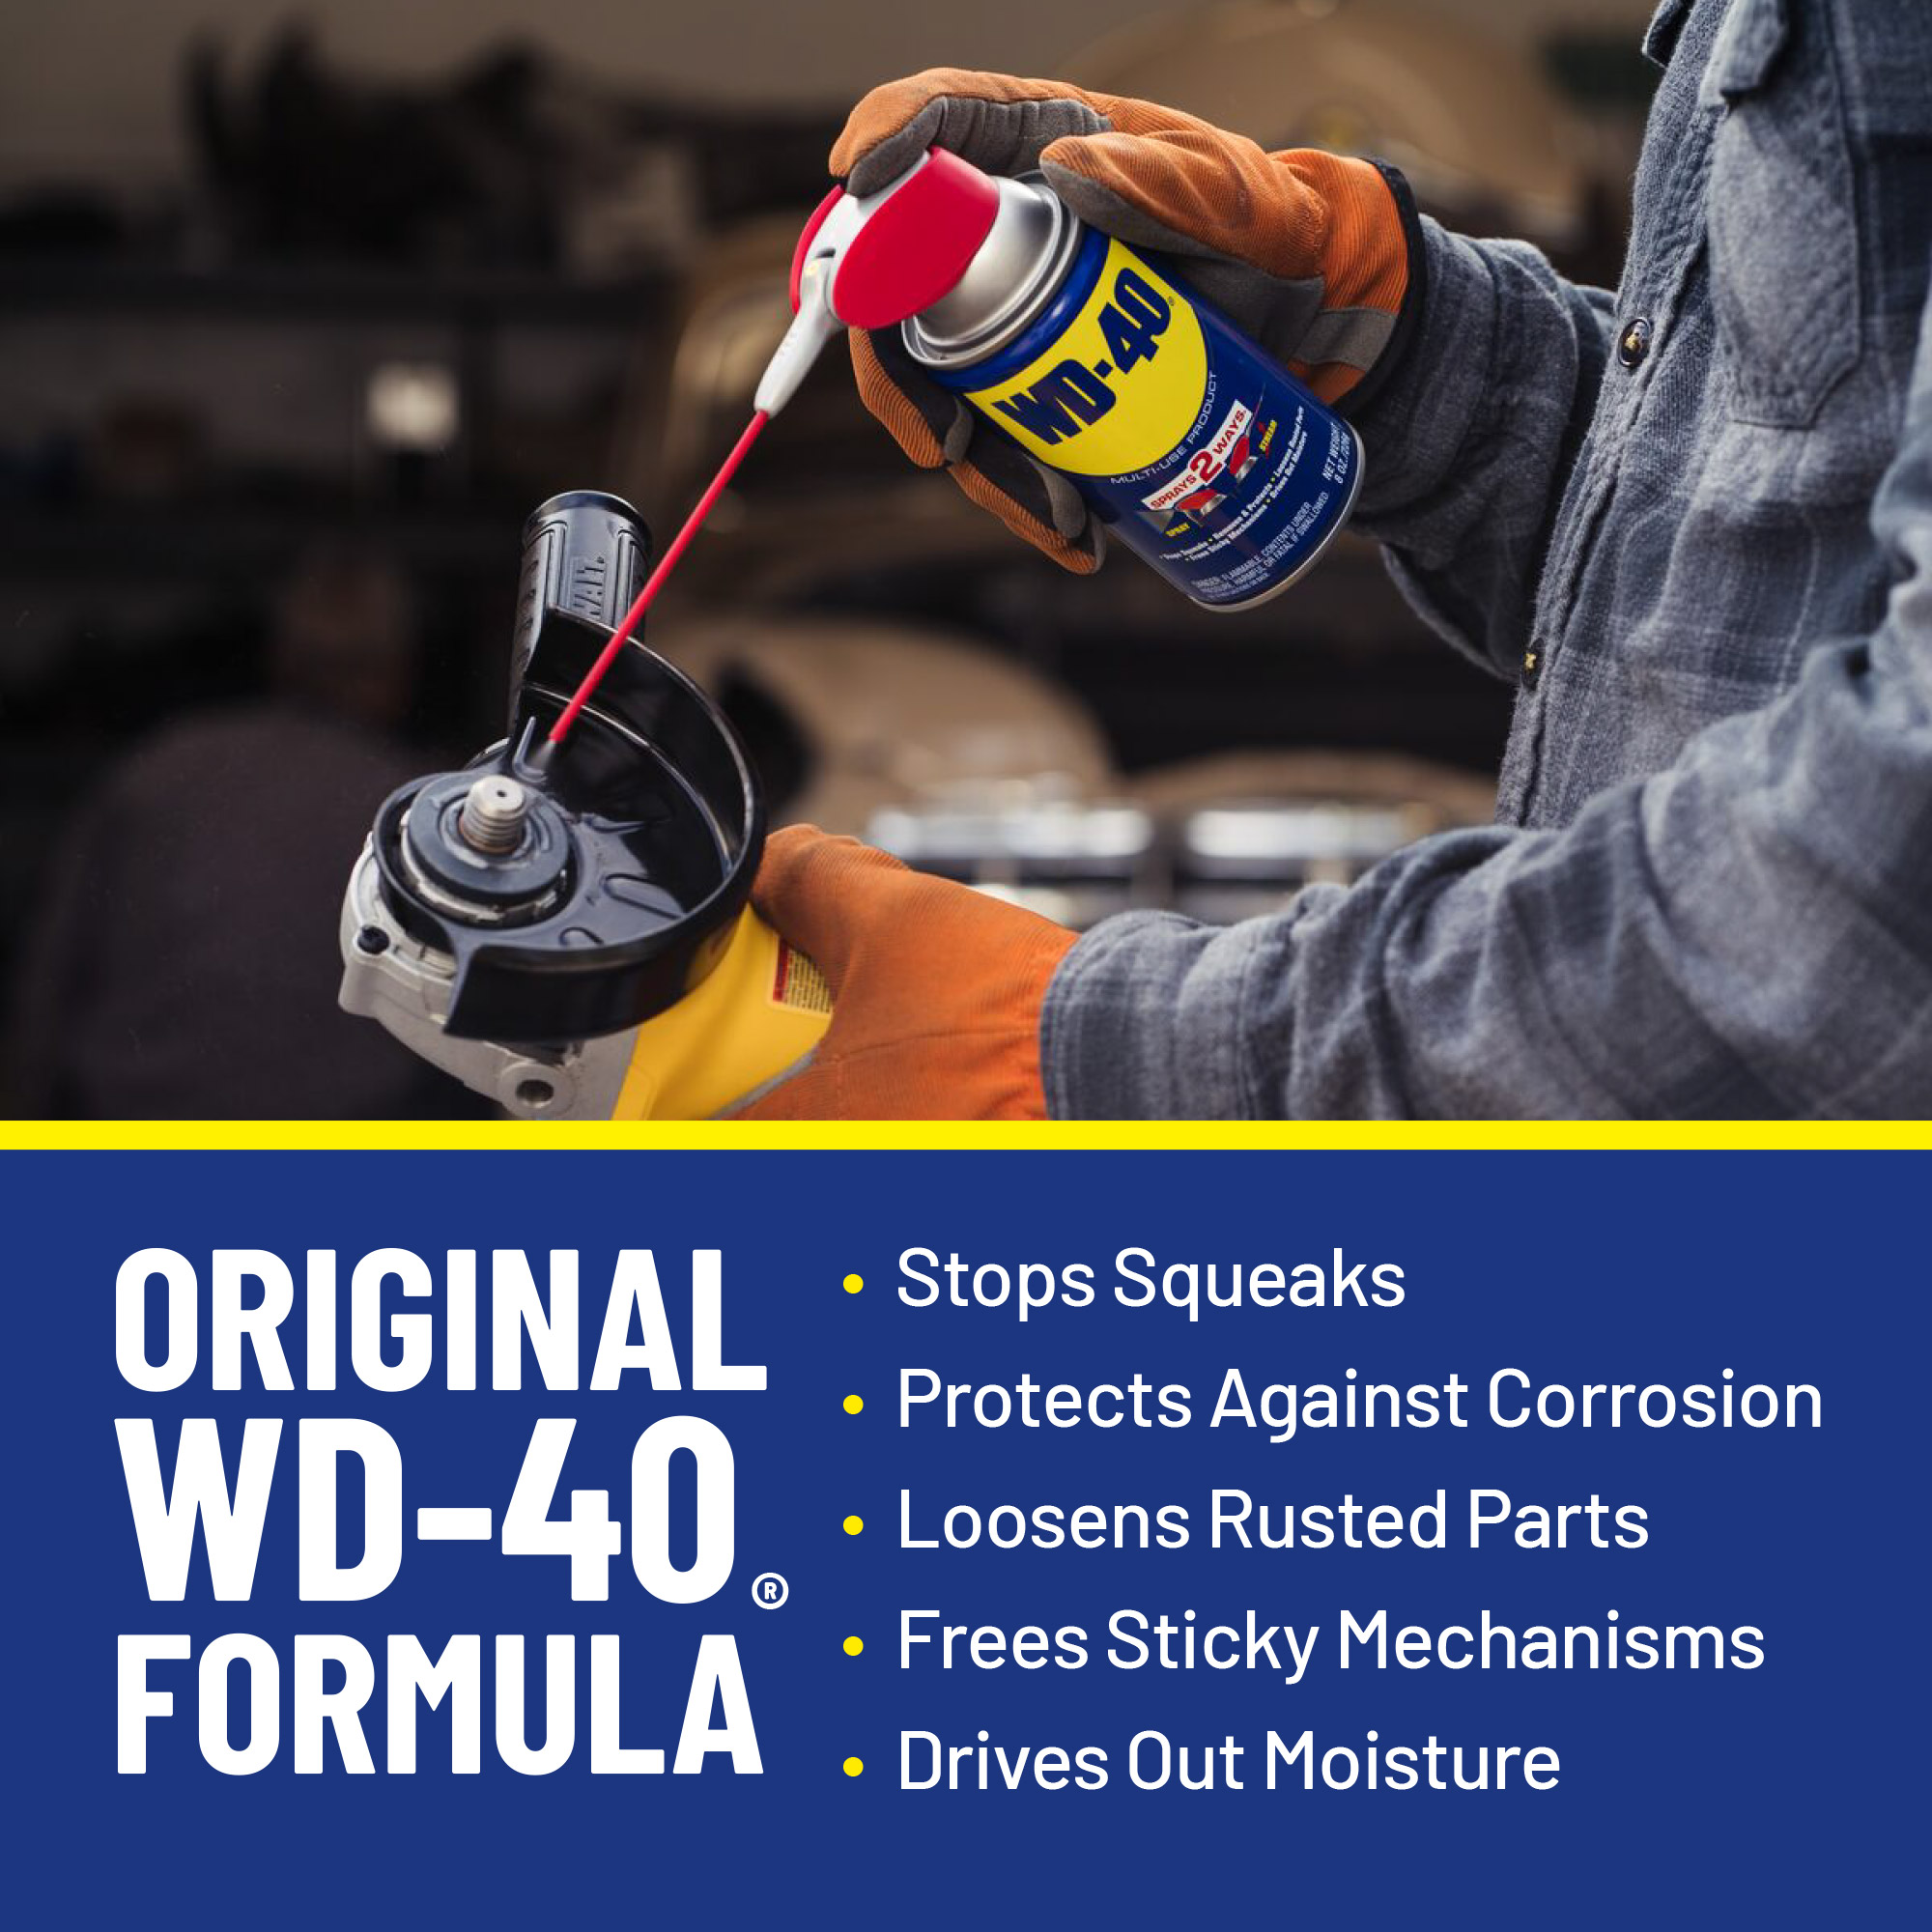 Original WD-40 Formula, Multi-Use Product With Smart Straw Sprays 2 Ways, Multi-Purpose Lubricant Spray, 12 oz - image 5 of 10